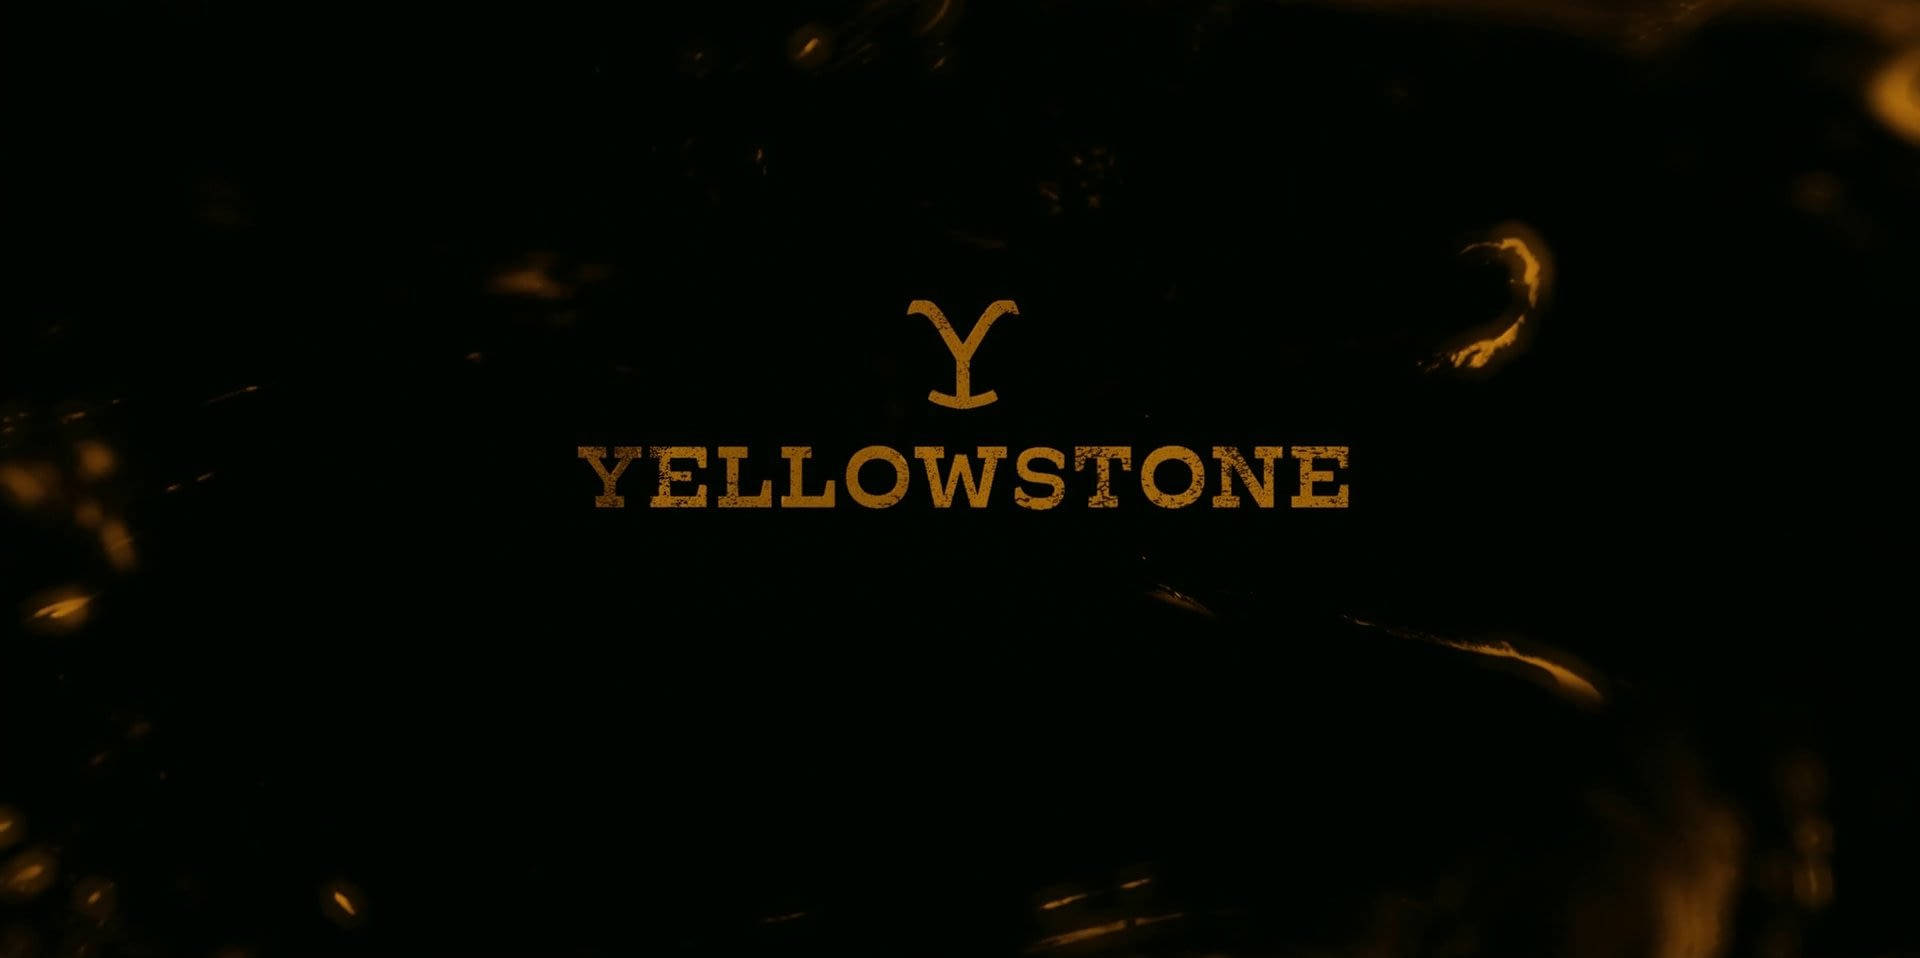 Yellowstone Tv Show Brand Mark Background